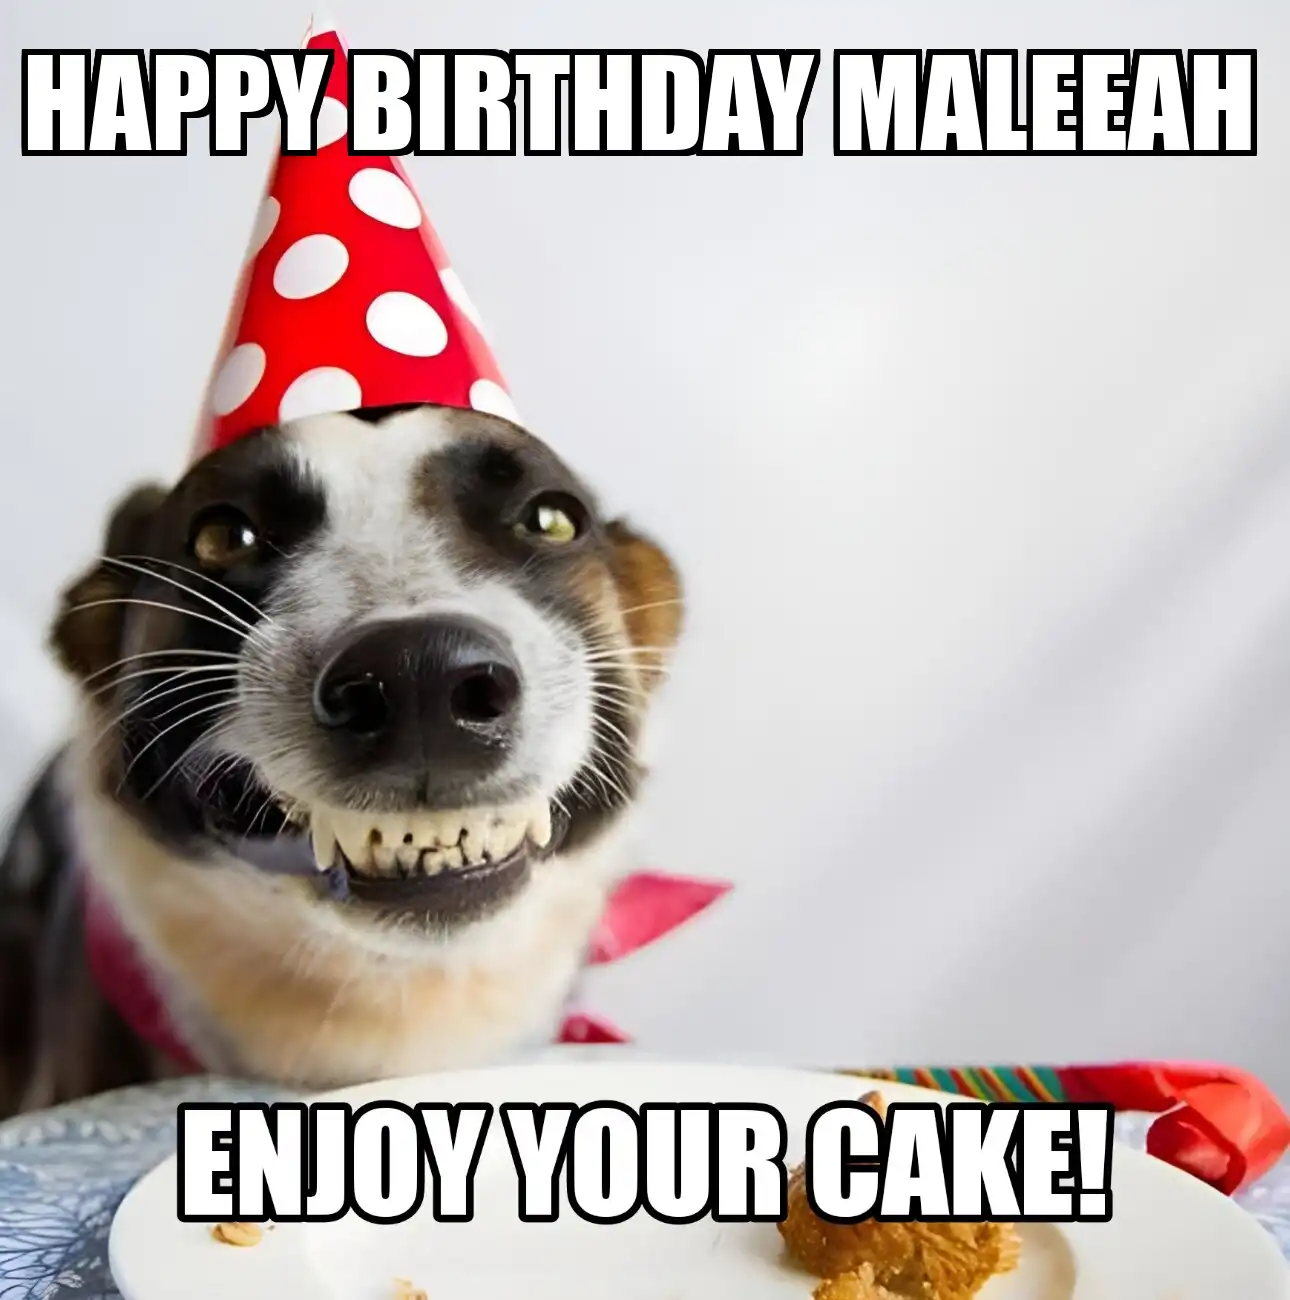 Happy Birthday Maleeah Enjoy Your Cake Dog Meme